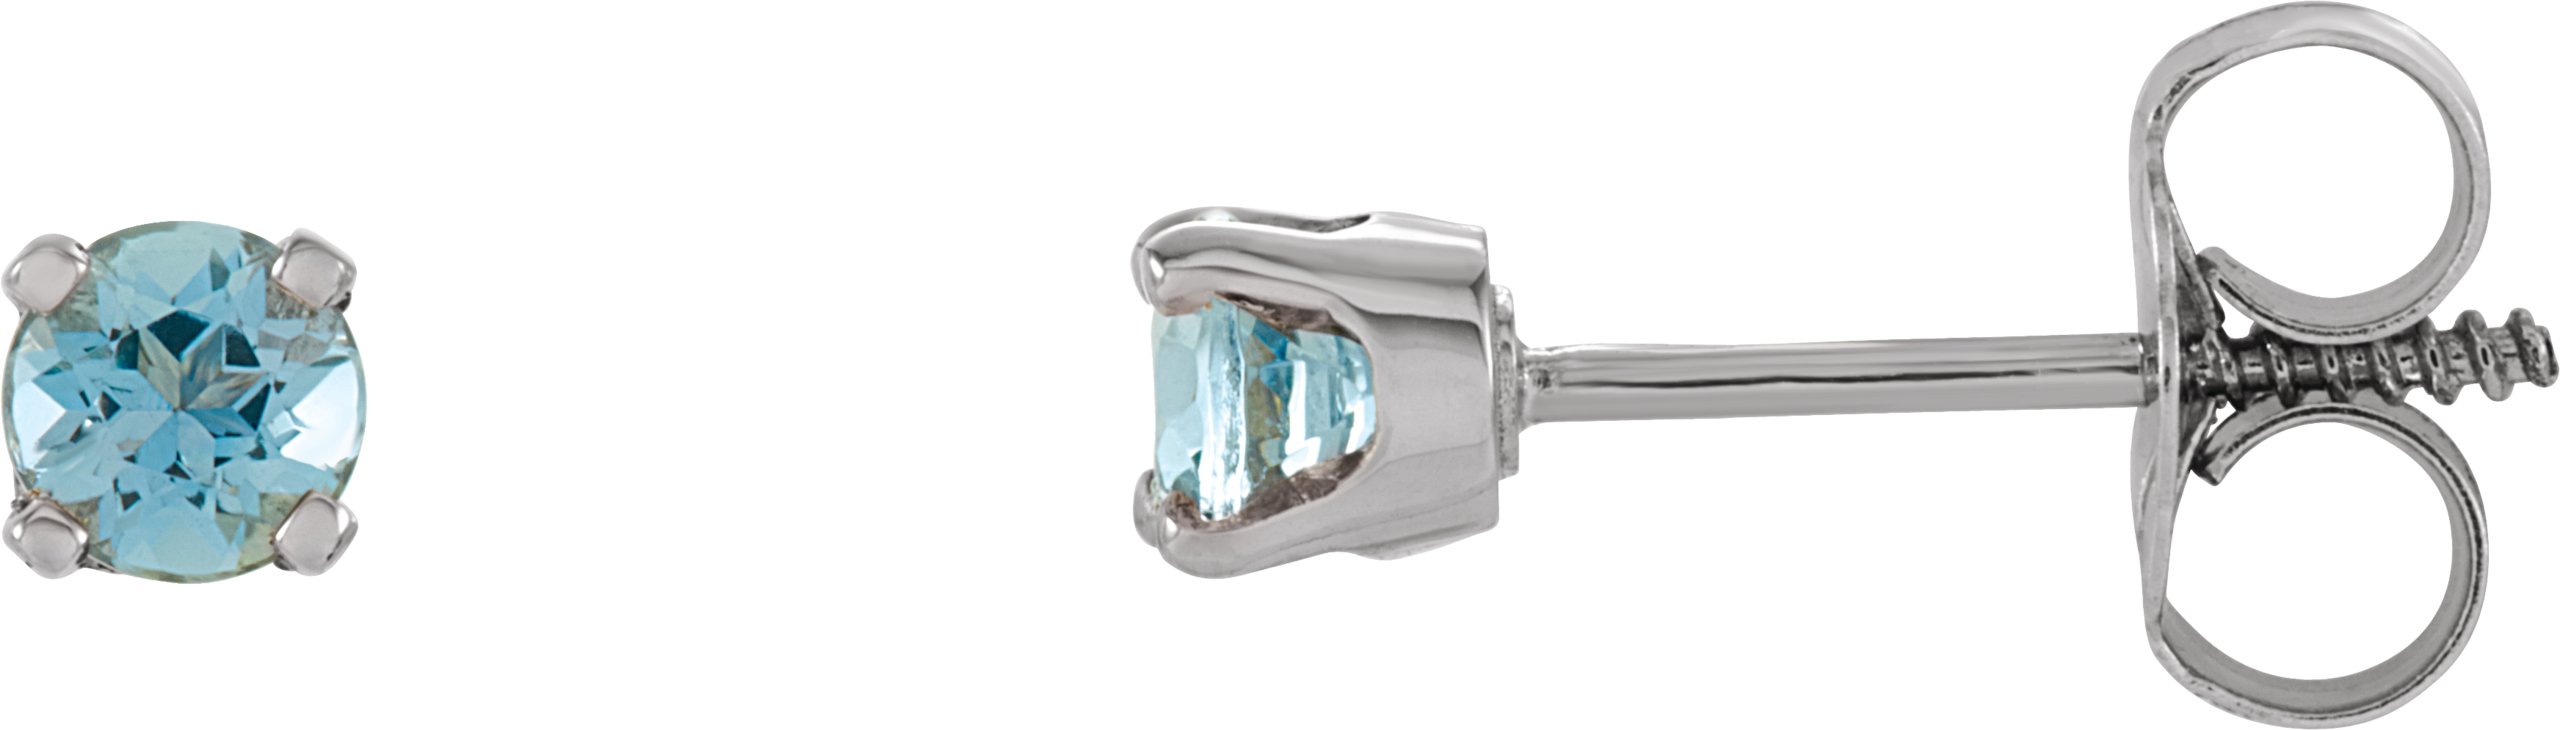 Sterling Silver 3 mm Round Imitation Aquamarine Youth Birthstone Earrings Ref. 11091712